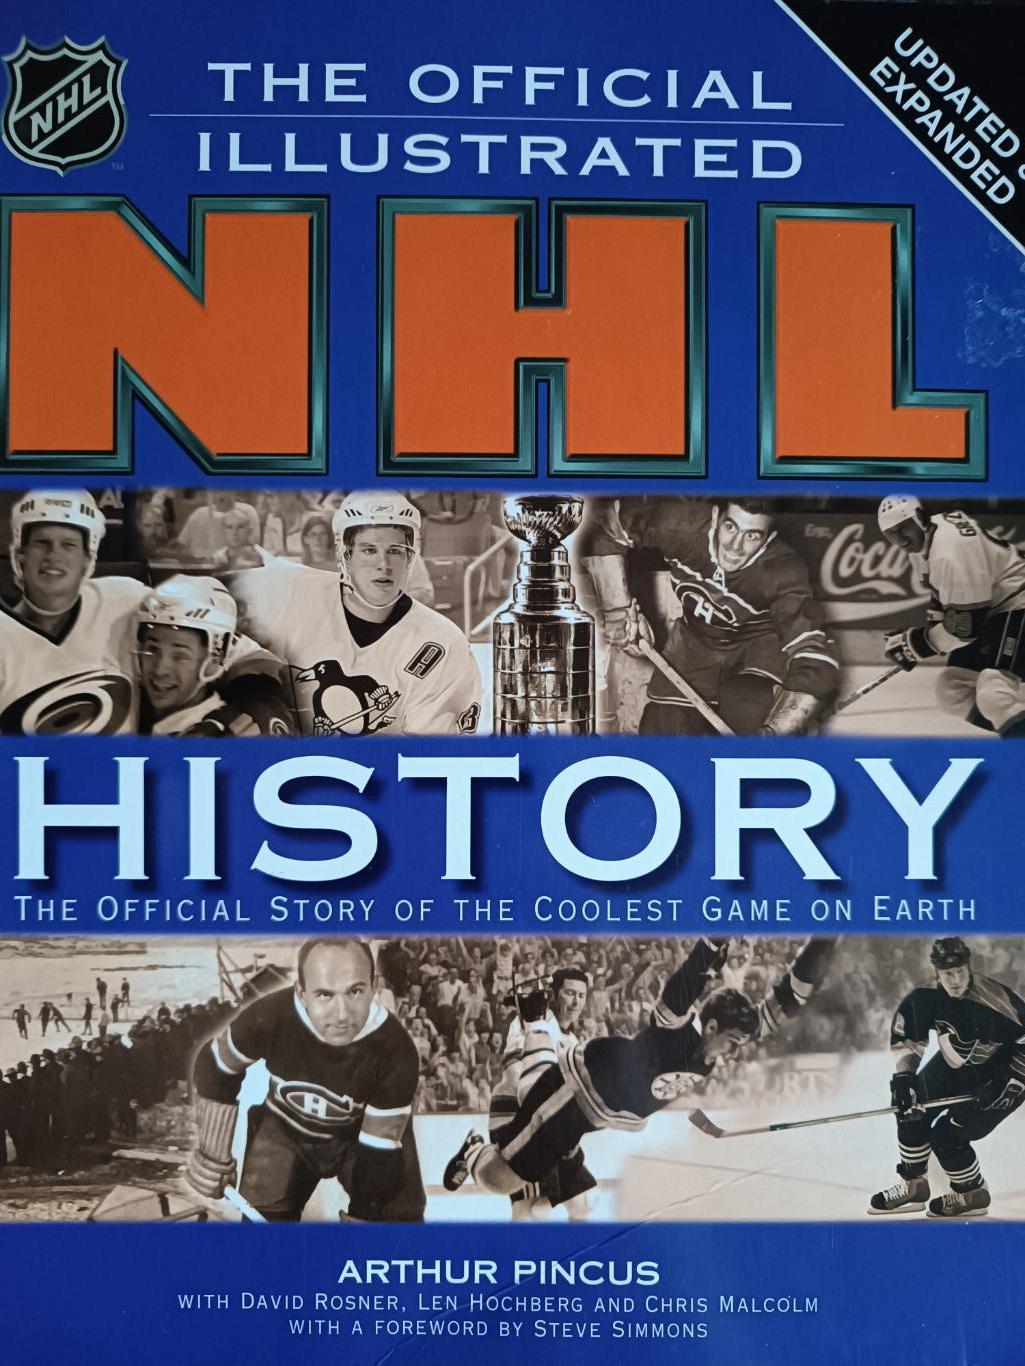 ХОККЕЙ КНИГА ИСТОРИЯ НХЛ 2000 THE OFFICIAL ILLUSTRATED NHL HISTORY BOOK